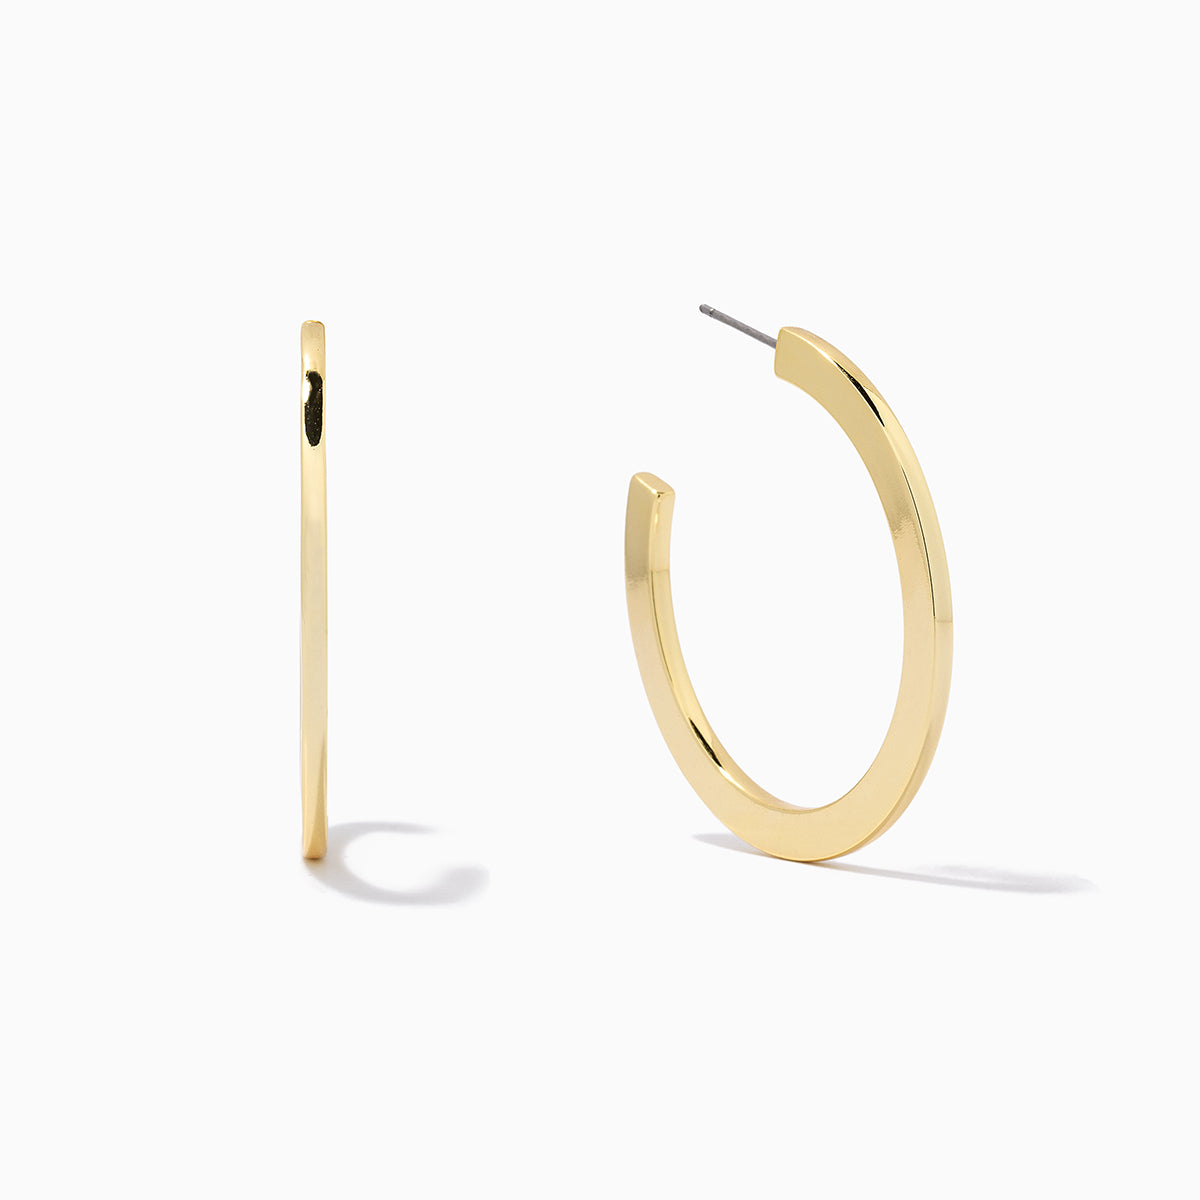 Cinema Thin Rectangular Hoop Earrings in Gold | Uncommon James